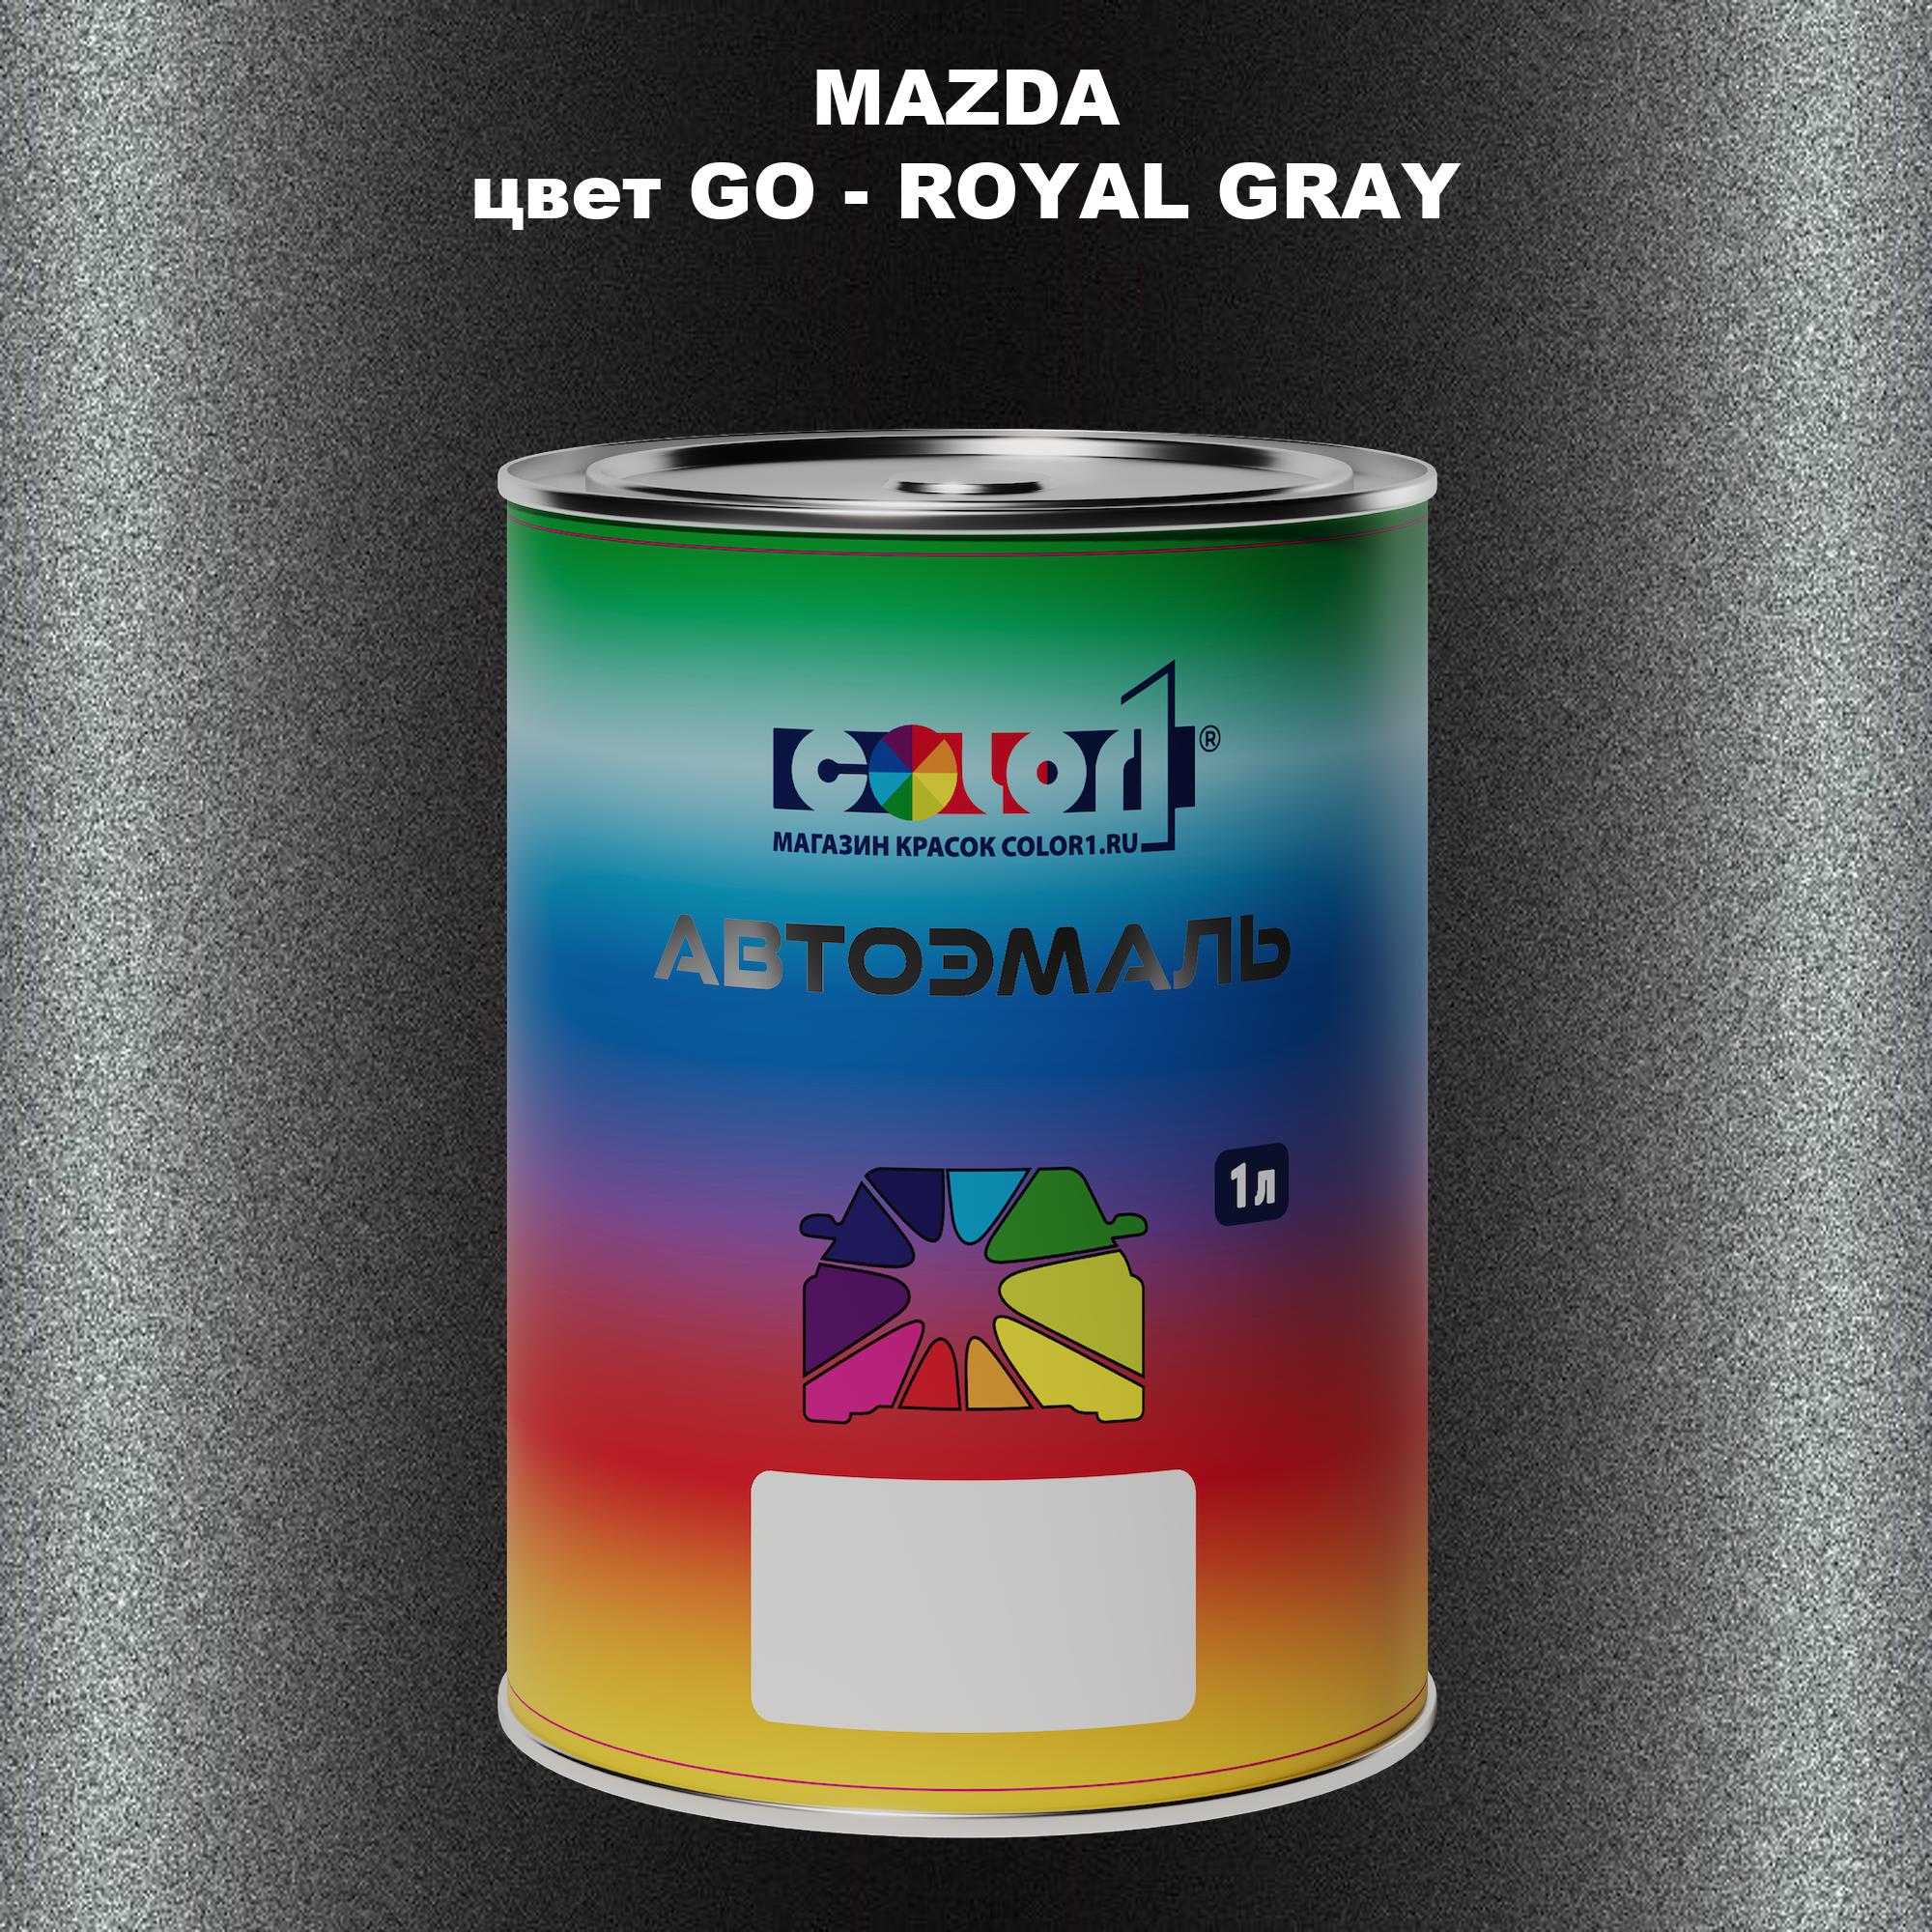 

Автомобильная краска COLOR1 для MAZDA, цвет GO - ROYAL GRAY, Серый